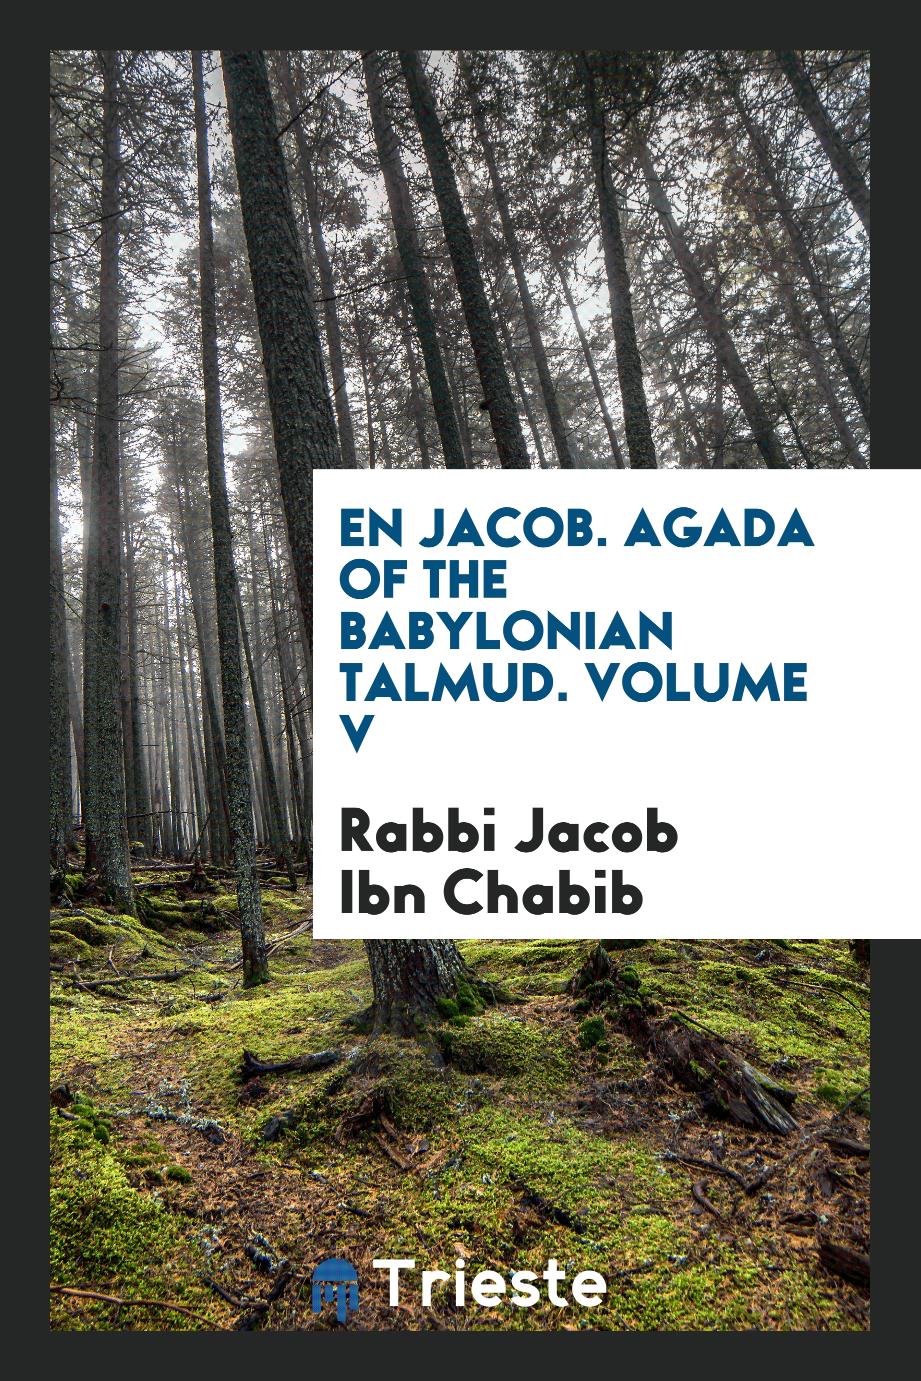 En Jacob. Agada of the babylonian talmud. Volume V